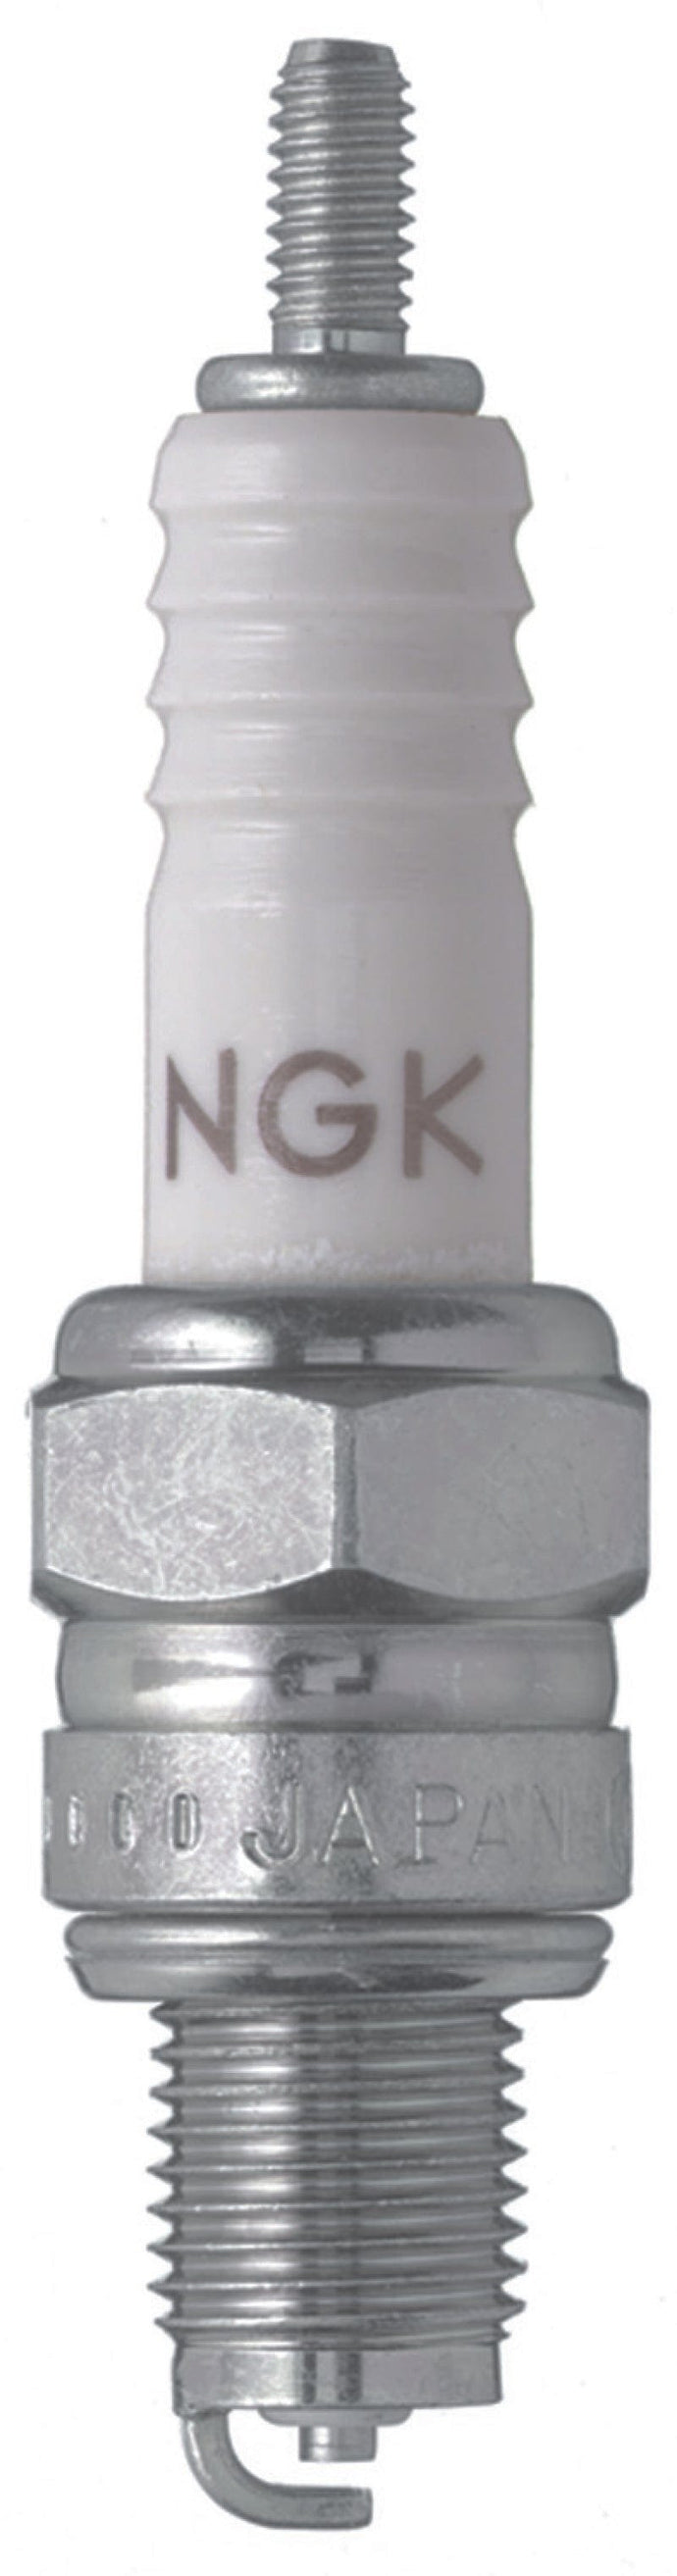 NGK NGK3228